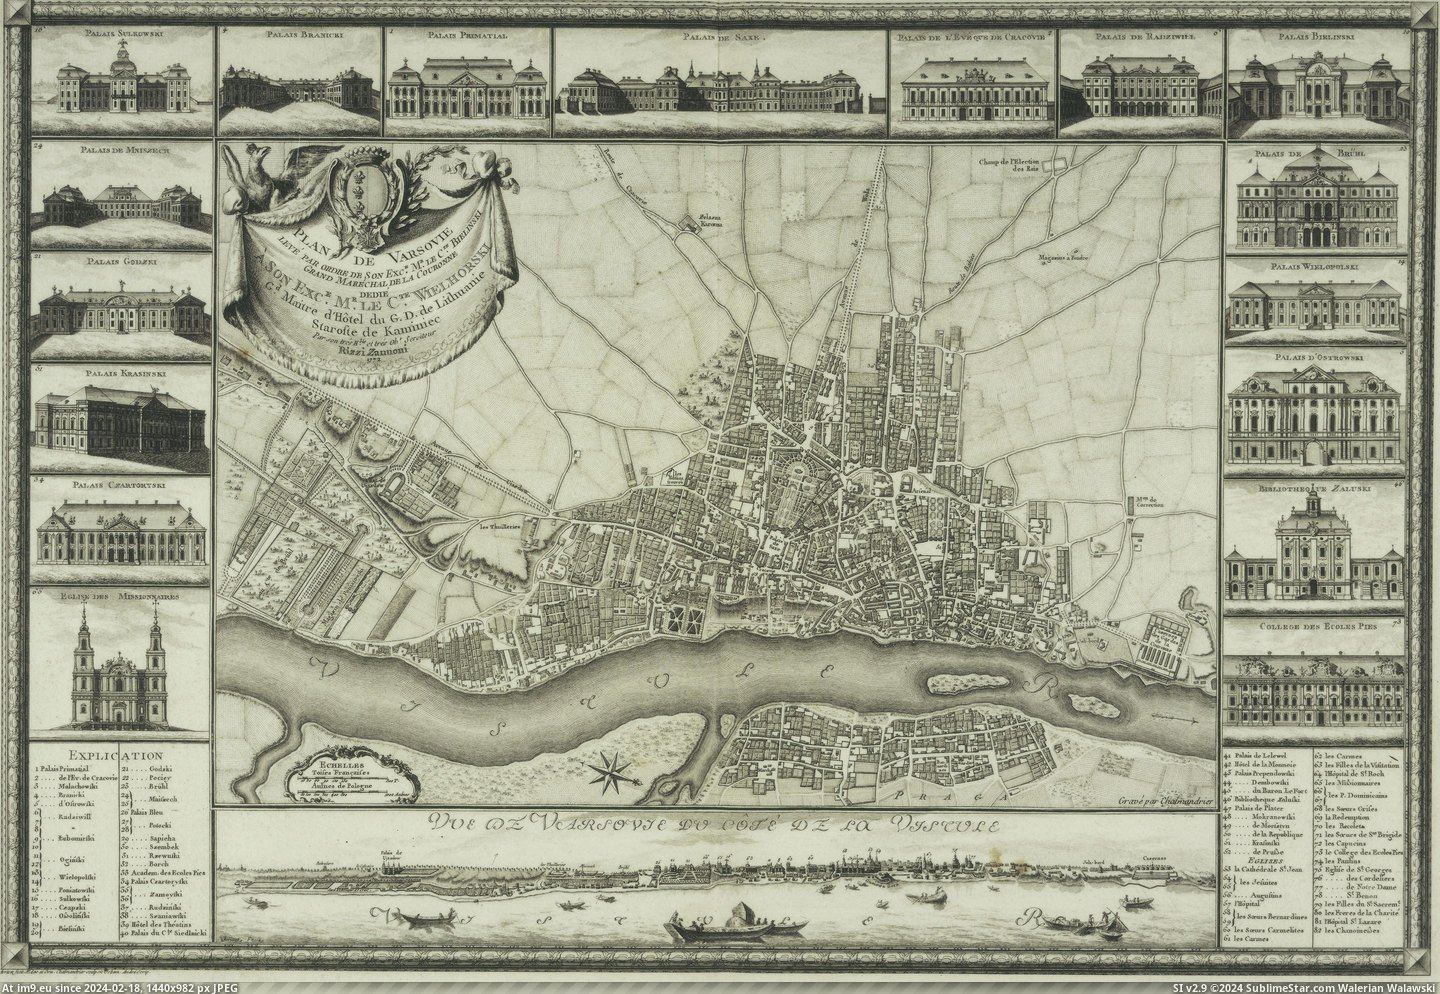 #Plan #Rizzi #Zannoni #Warsaw [Mapporn] 1772 plan of Warsaw by Rizzi-Zannoni [4200x2877] Pic. (Image of album My r/MAPS favs))